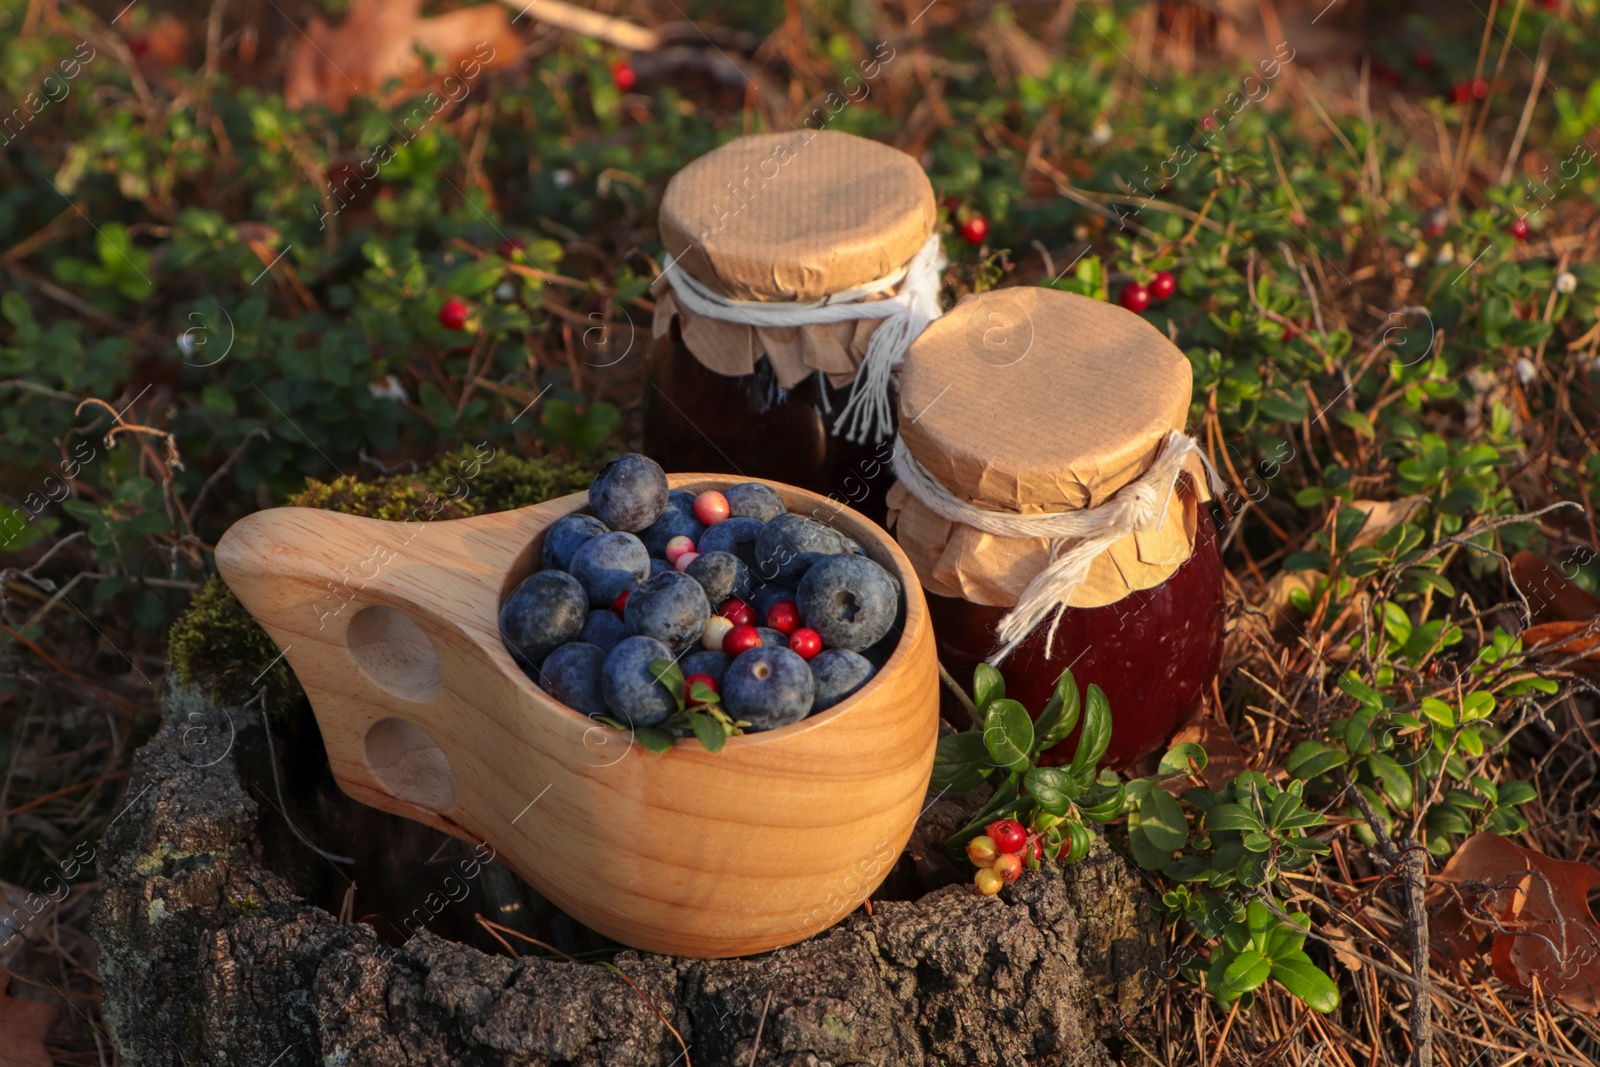 Photo of Wooden mug full of fresh ripe blueberries, lingonberries and jars with jam on stump